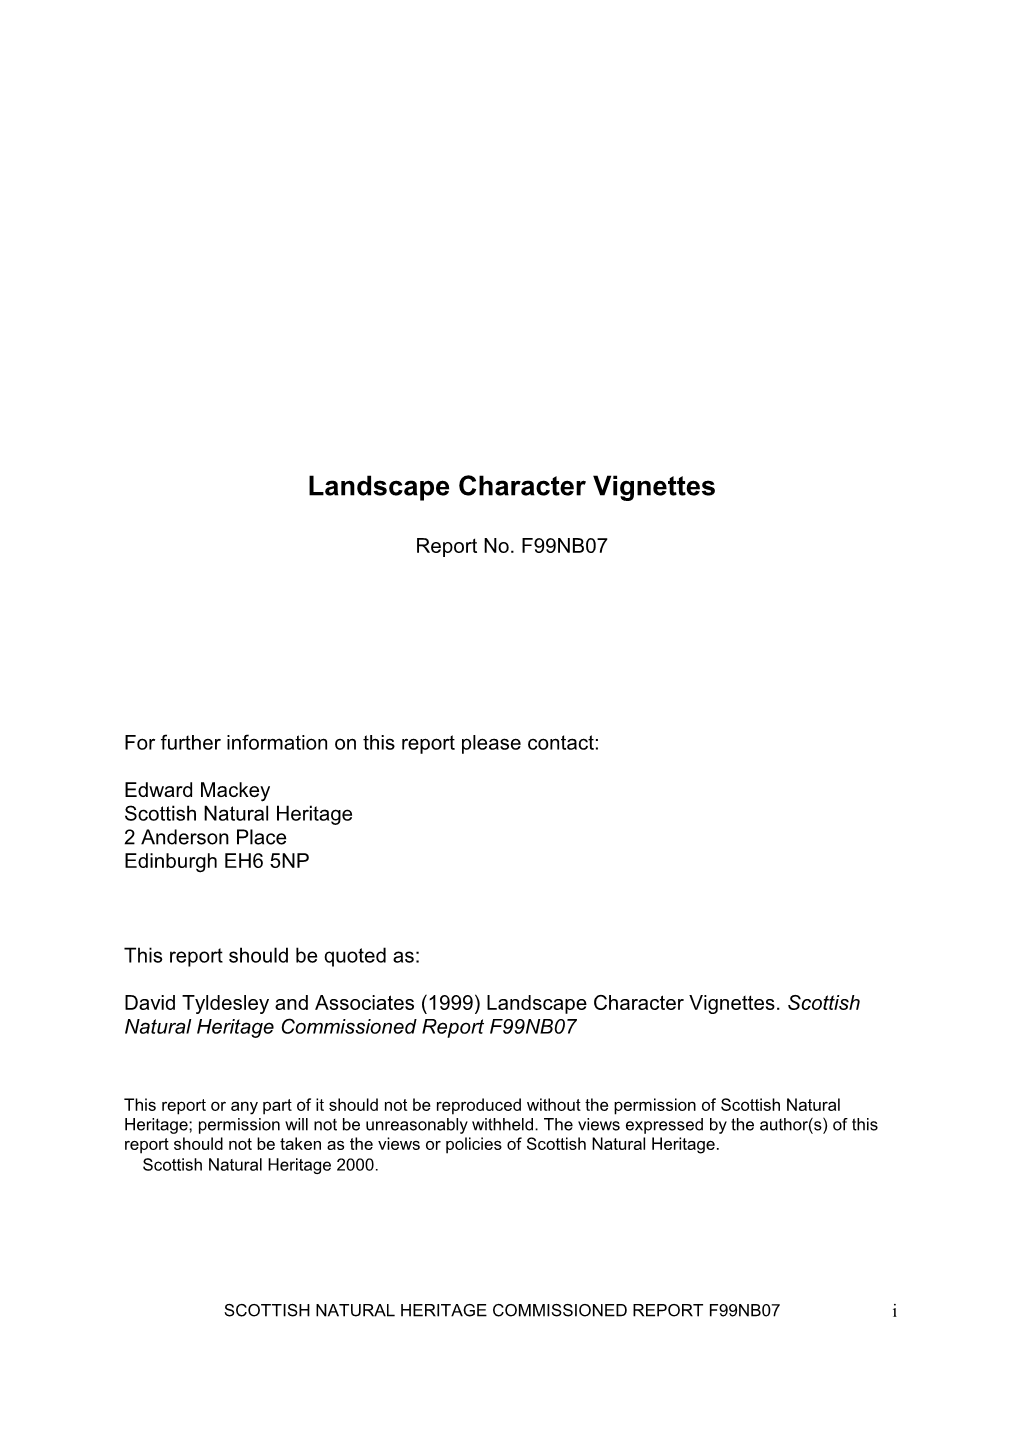 SNH Commissioned Report: Landscape Character Vignettes